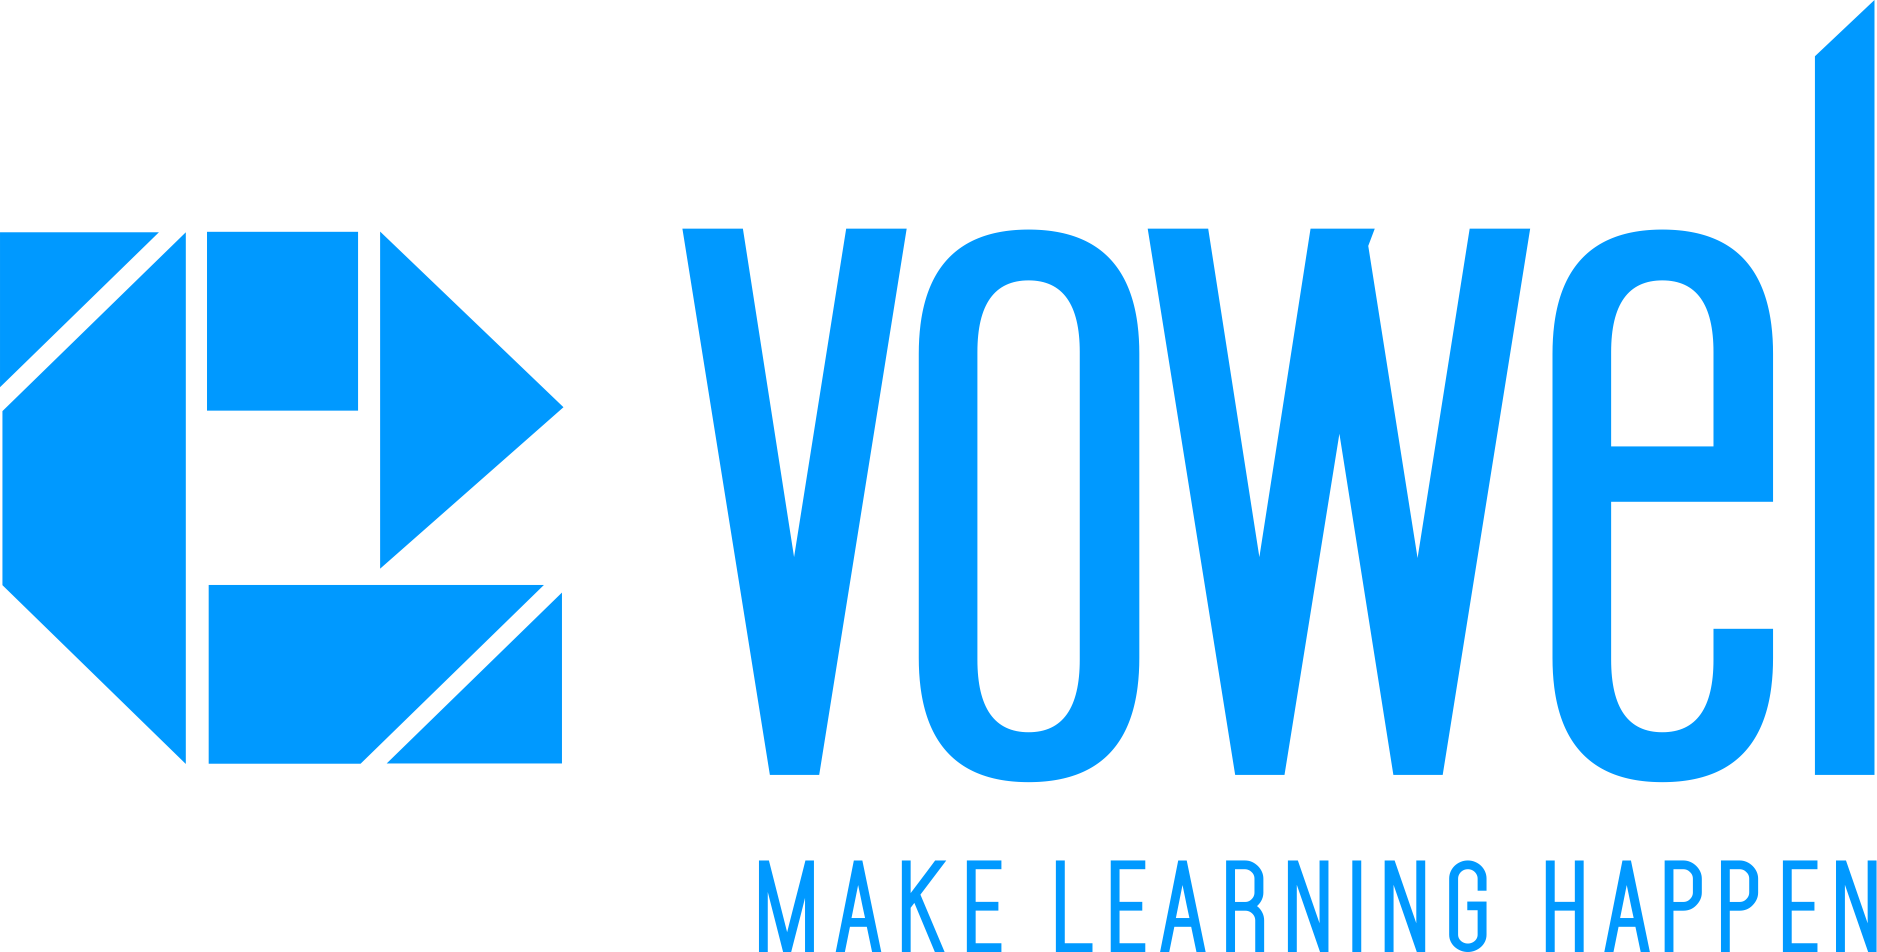 Vowel LMS logo